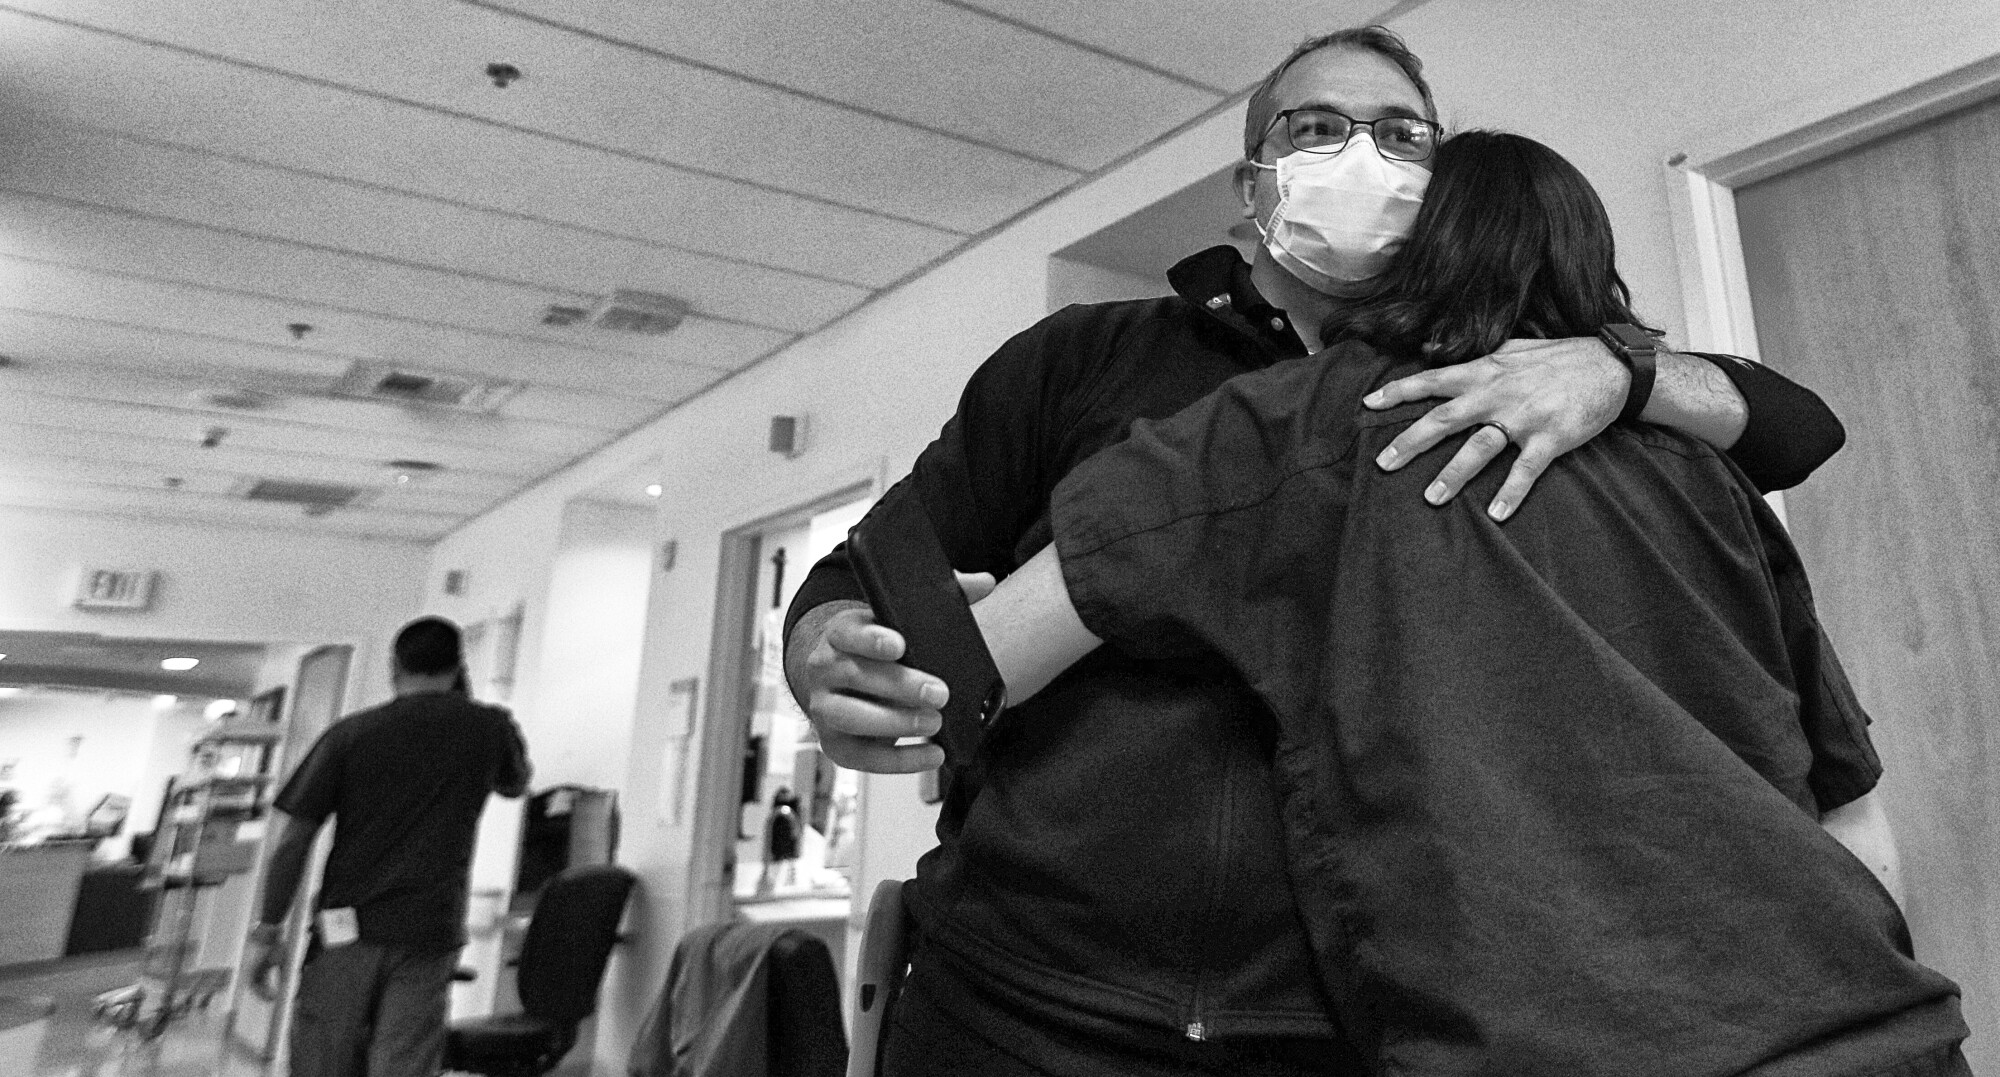 Chaplain Kevin hugging a nurse in a hallway